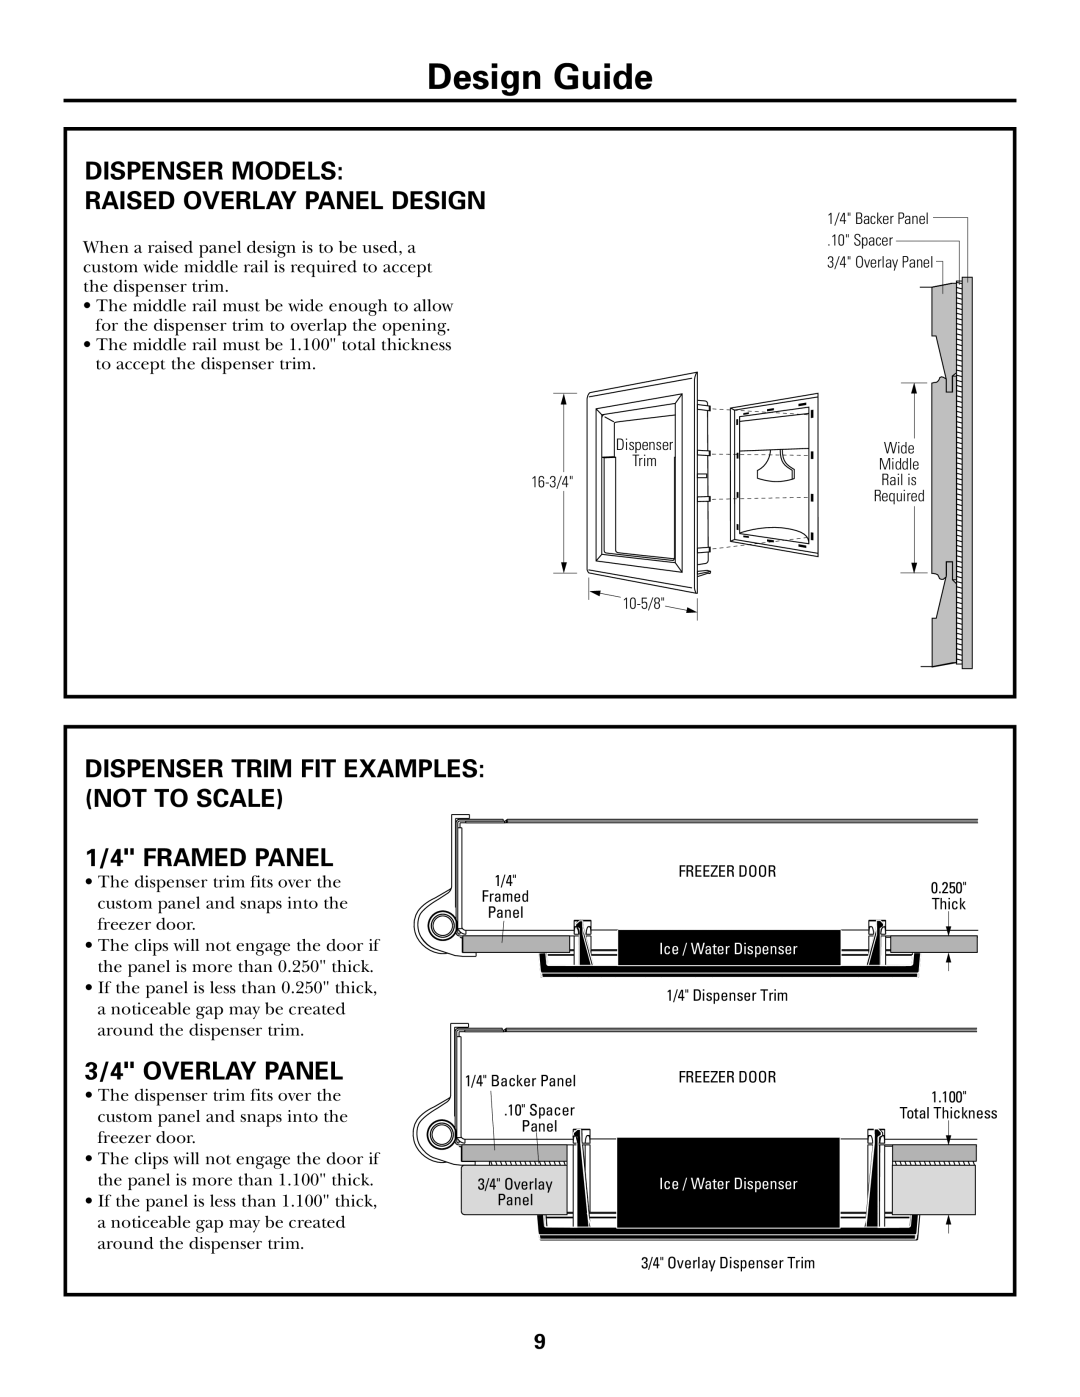 GE Monogram Side by Side Refrigerators Dispenser Models Raised Overlay Panel Design, 3/4 OVERLAY PANEL, Design Guide 